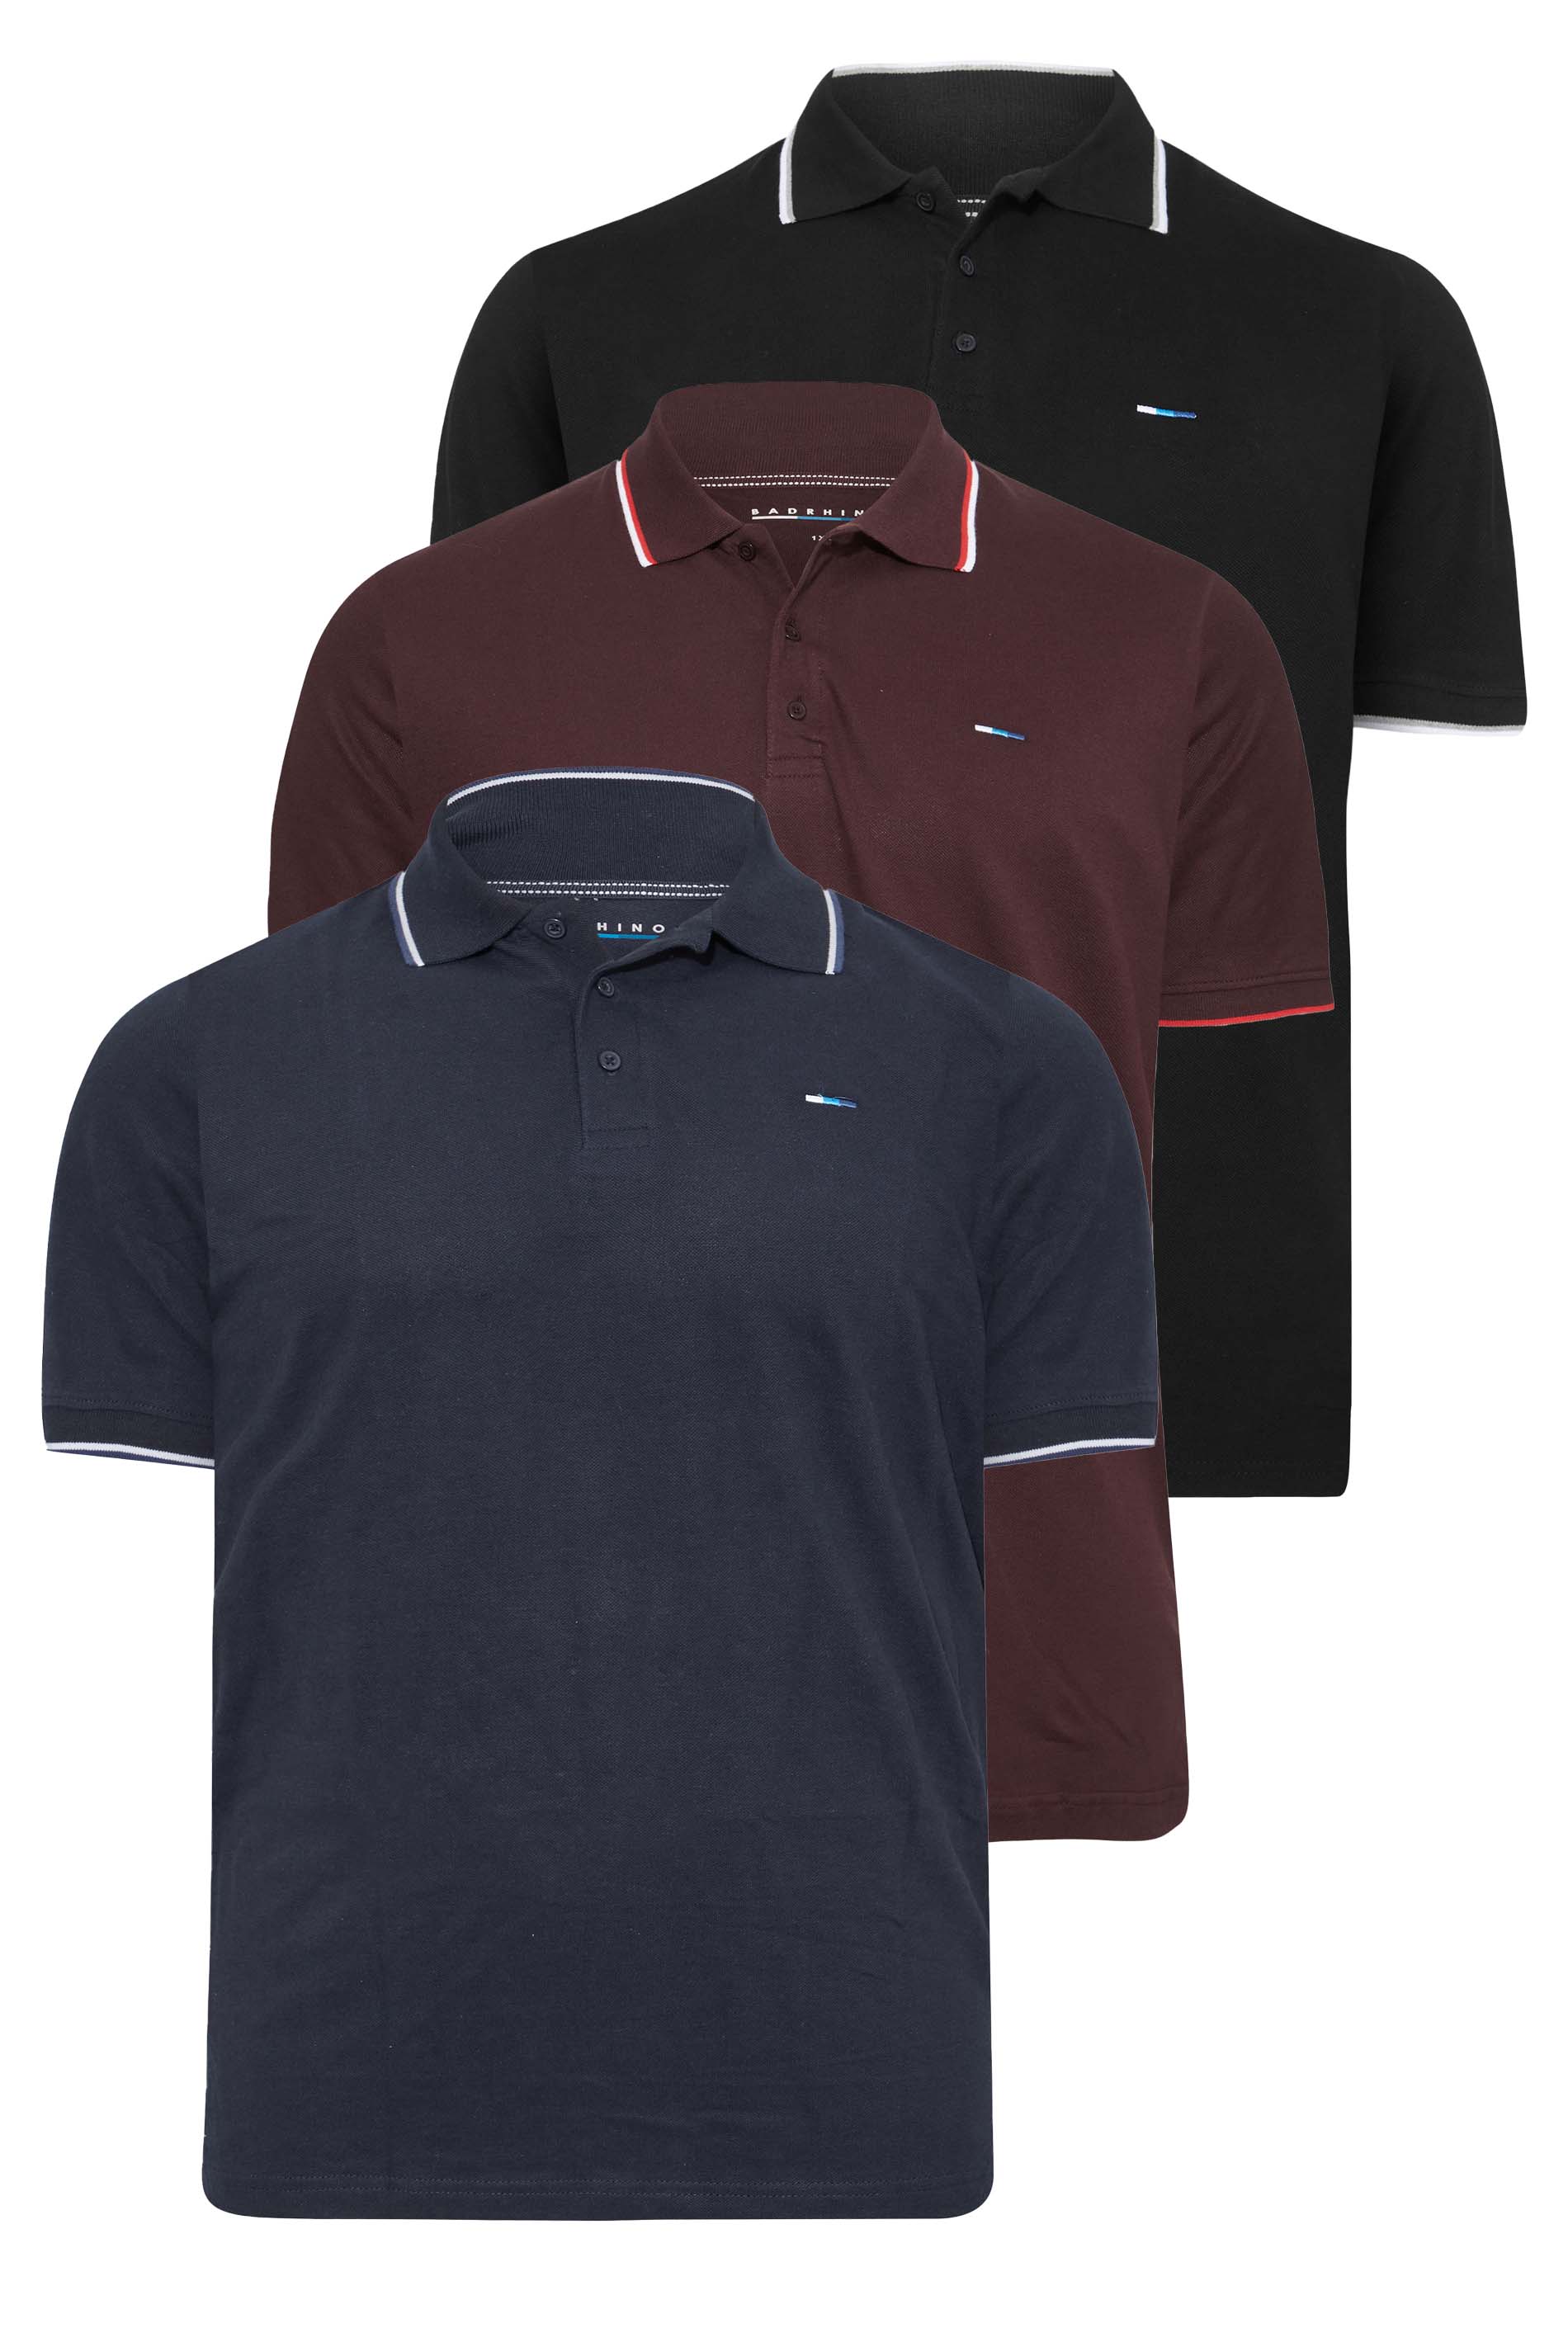 BadRhino Navy Blue 3 Pack Essential Tipped Polo Shirts | BadRhino 2